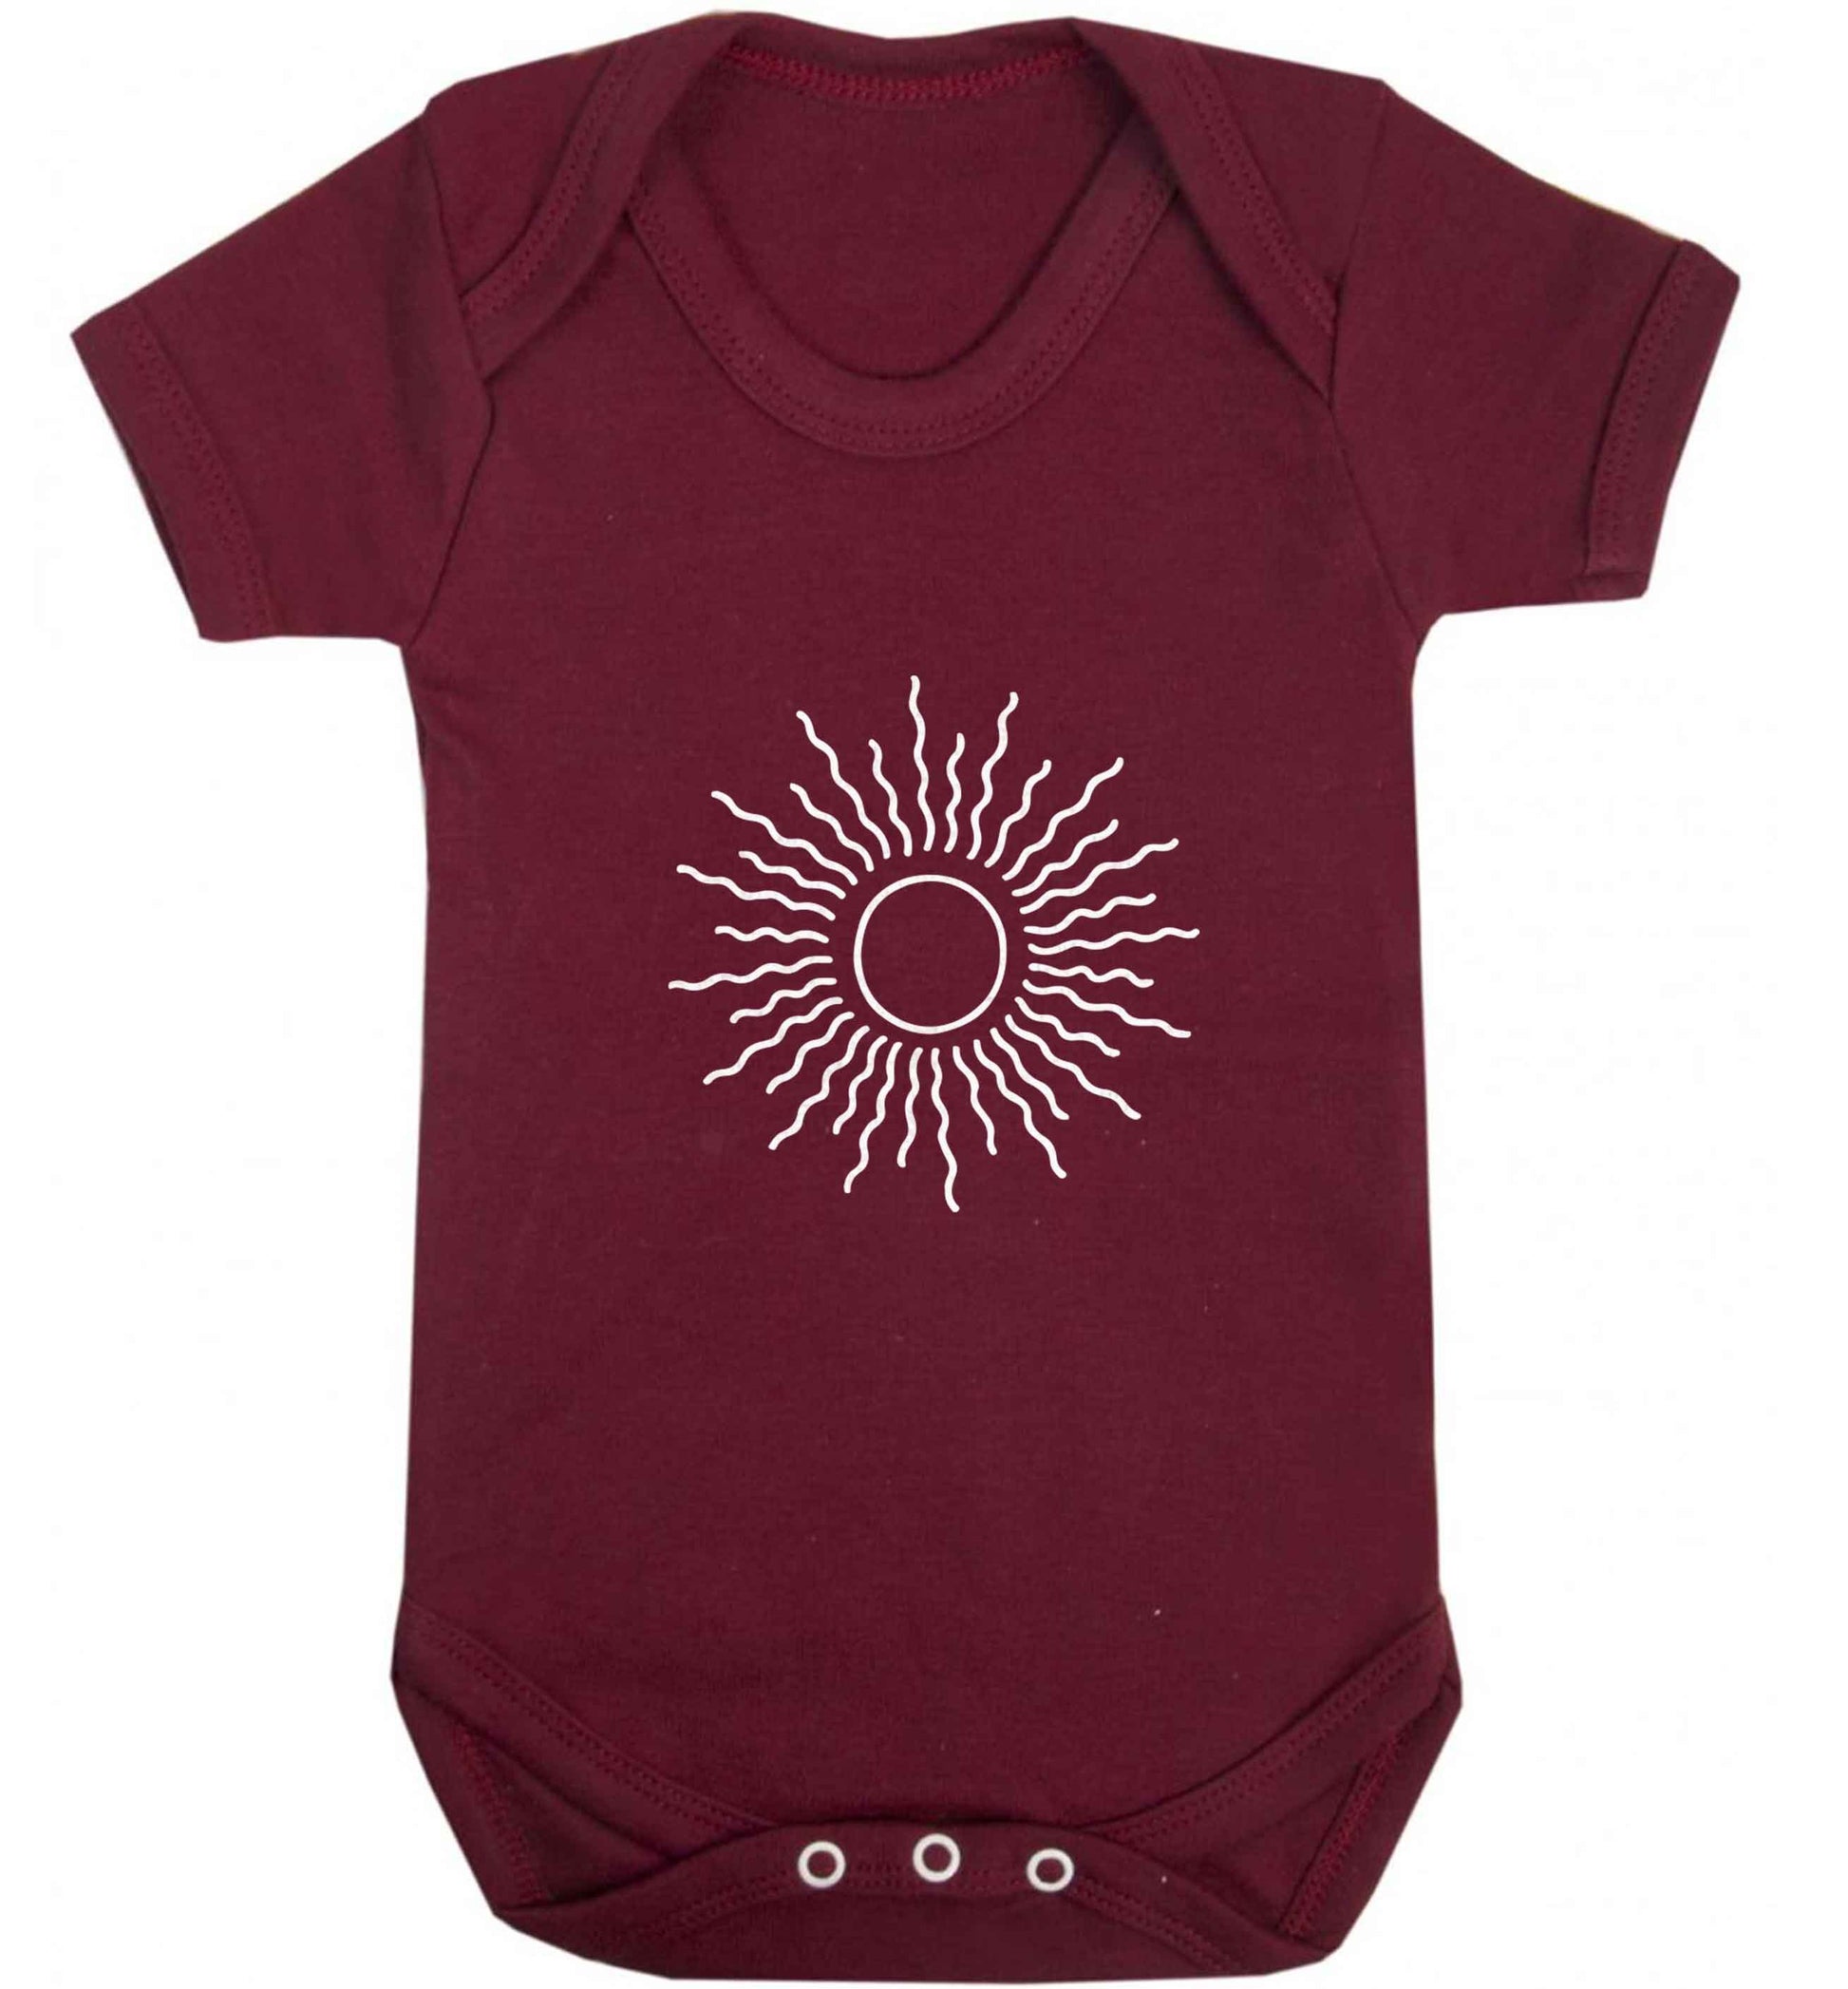 Sun illustration baby vest maroon 18-24 months